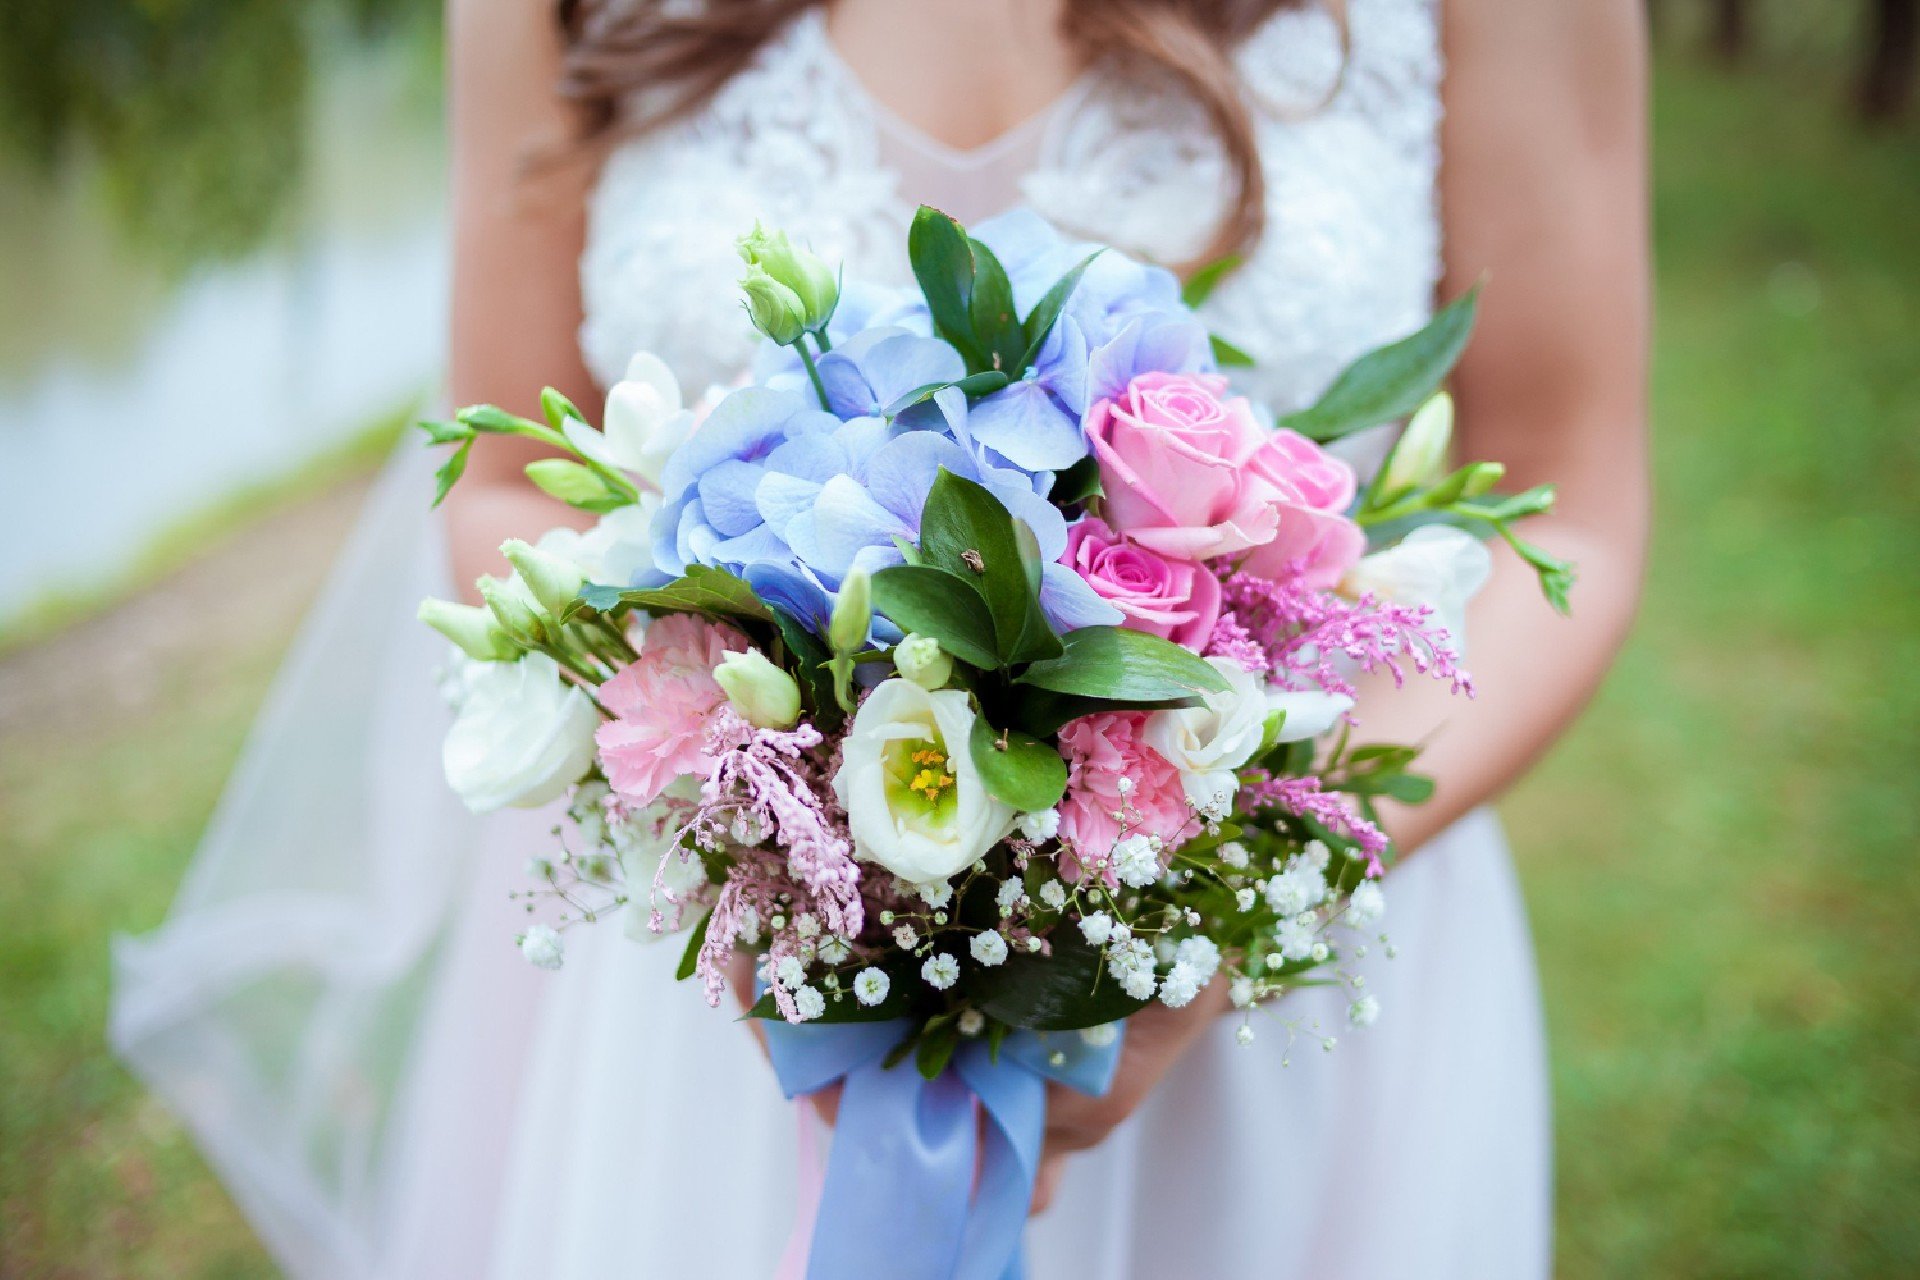 How to make a cascading wedding bouquet ?